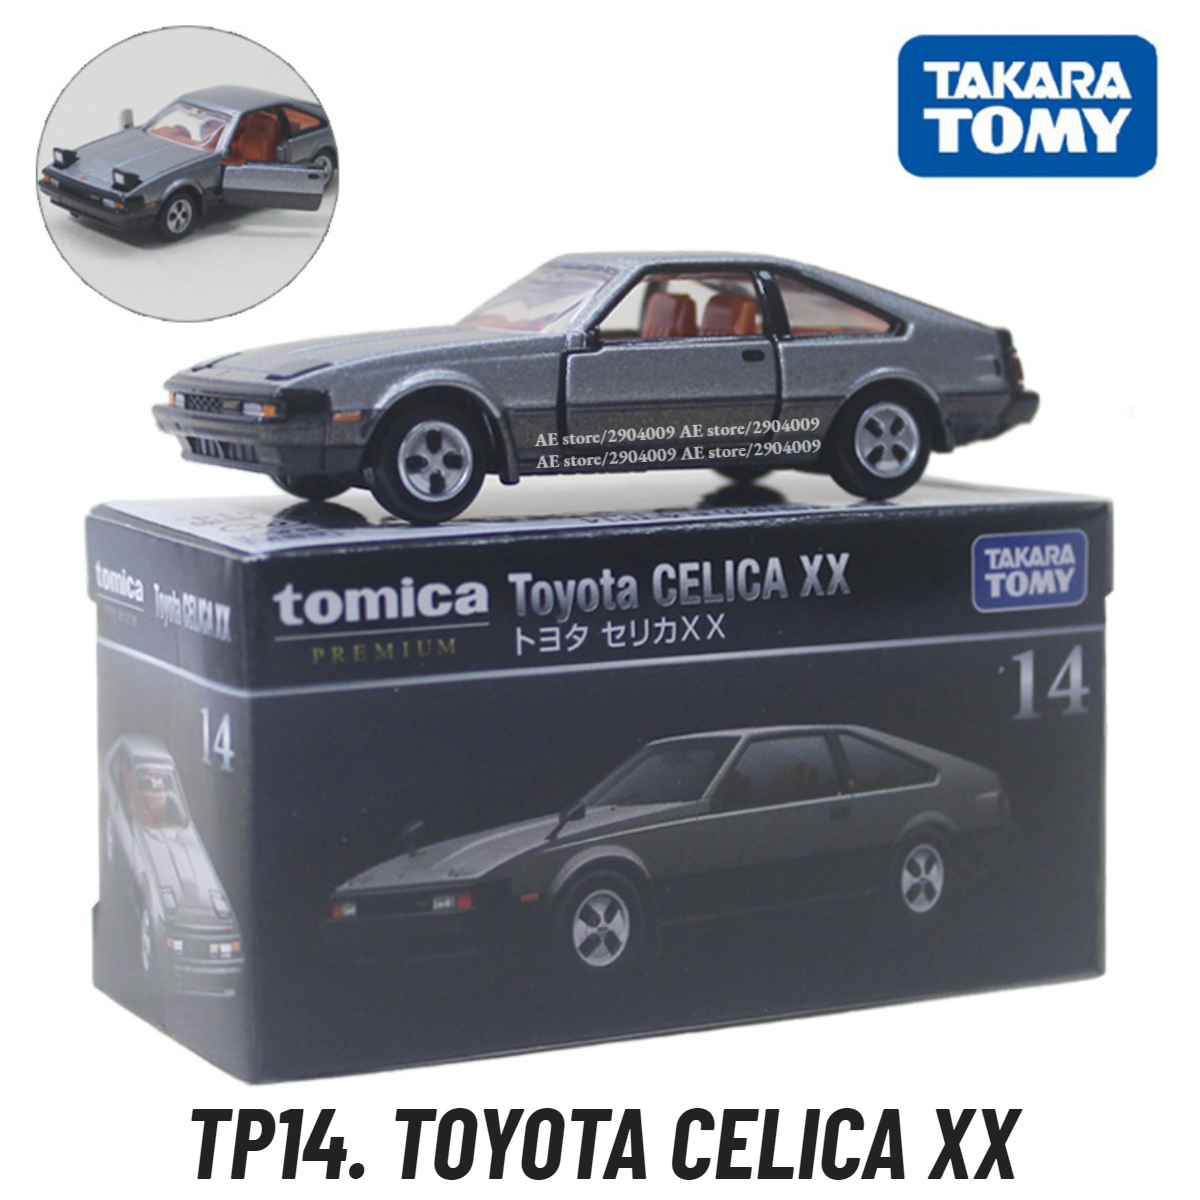 Takara Tomy Tomica cao cấp tp14. Toyota Celica XX Xe mô hình bản sao Xe